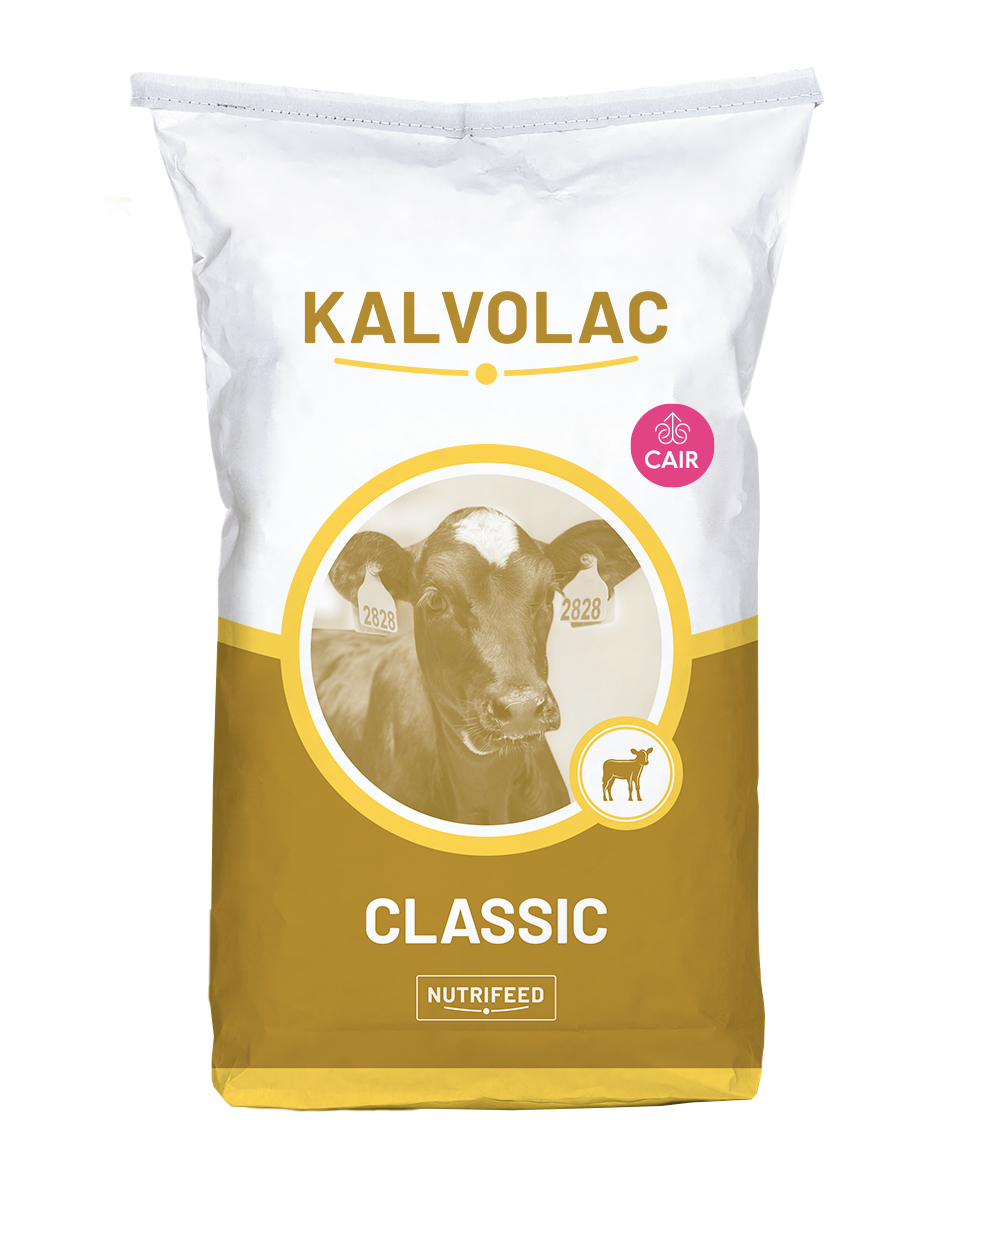 Kalvolac Classic CAIR